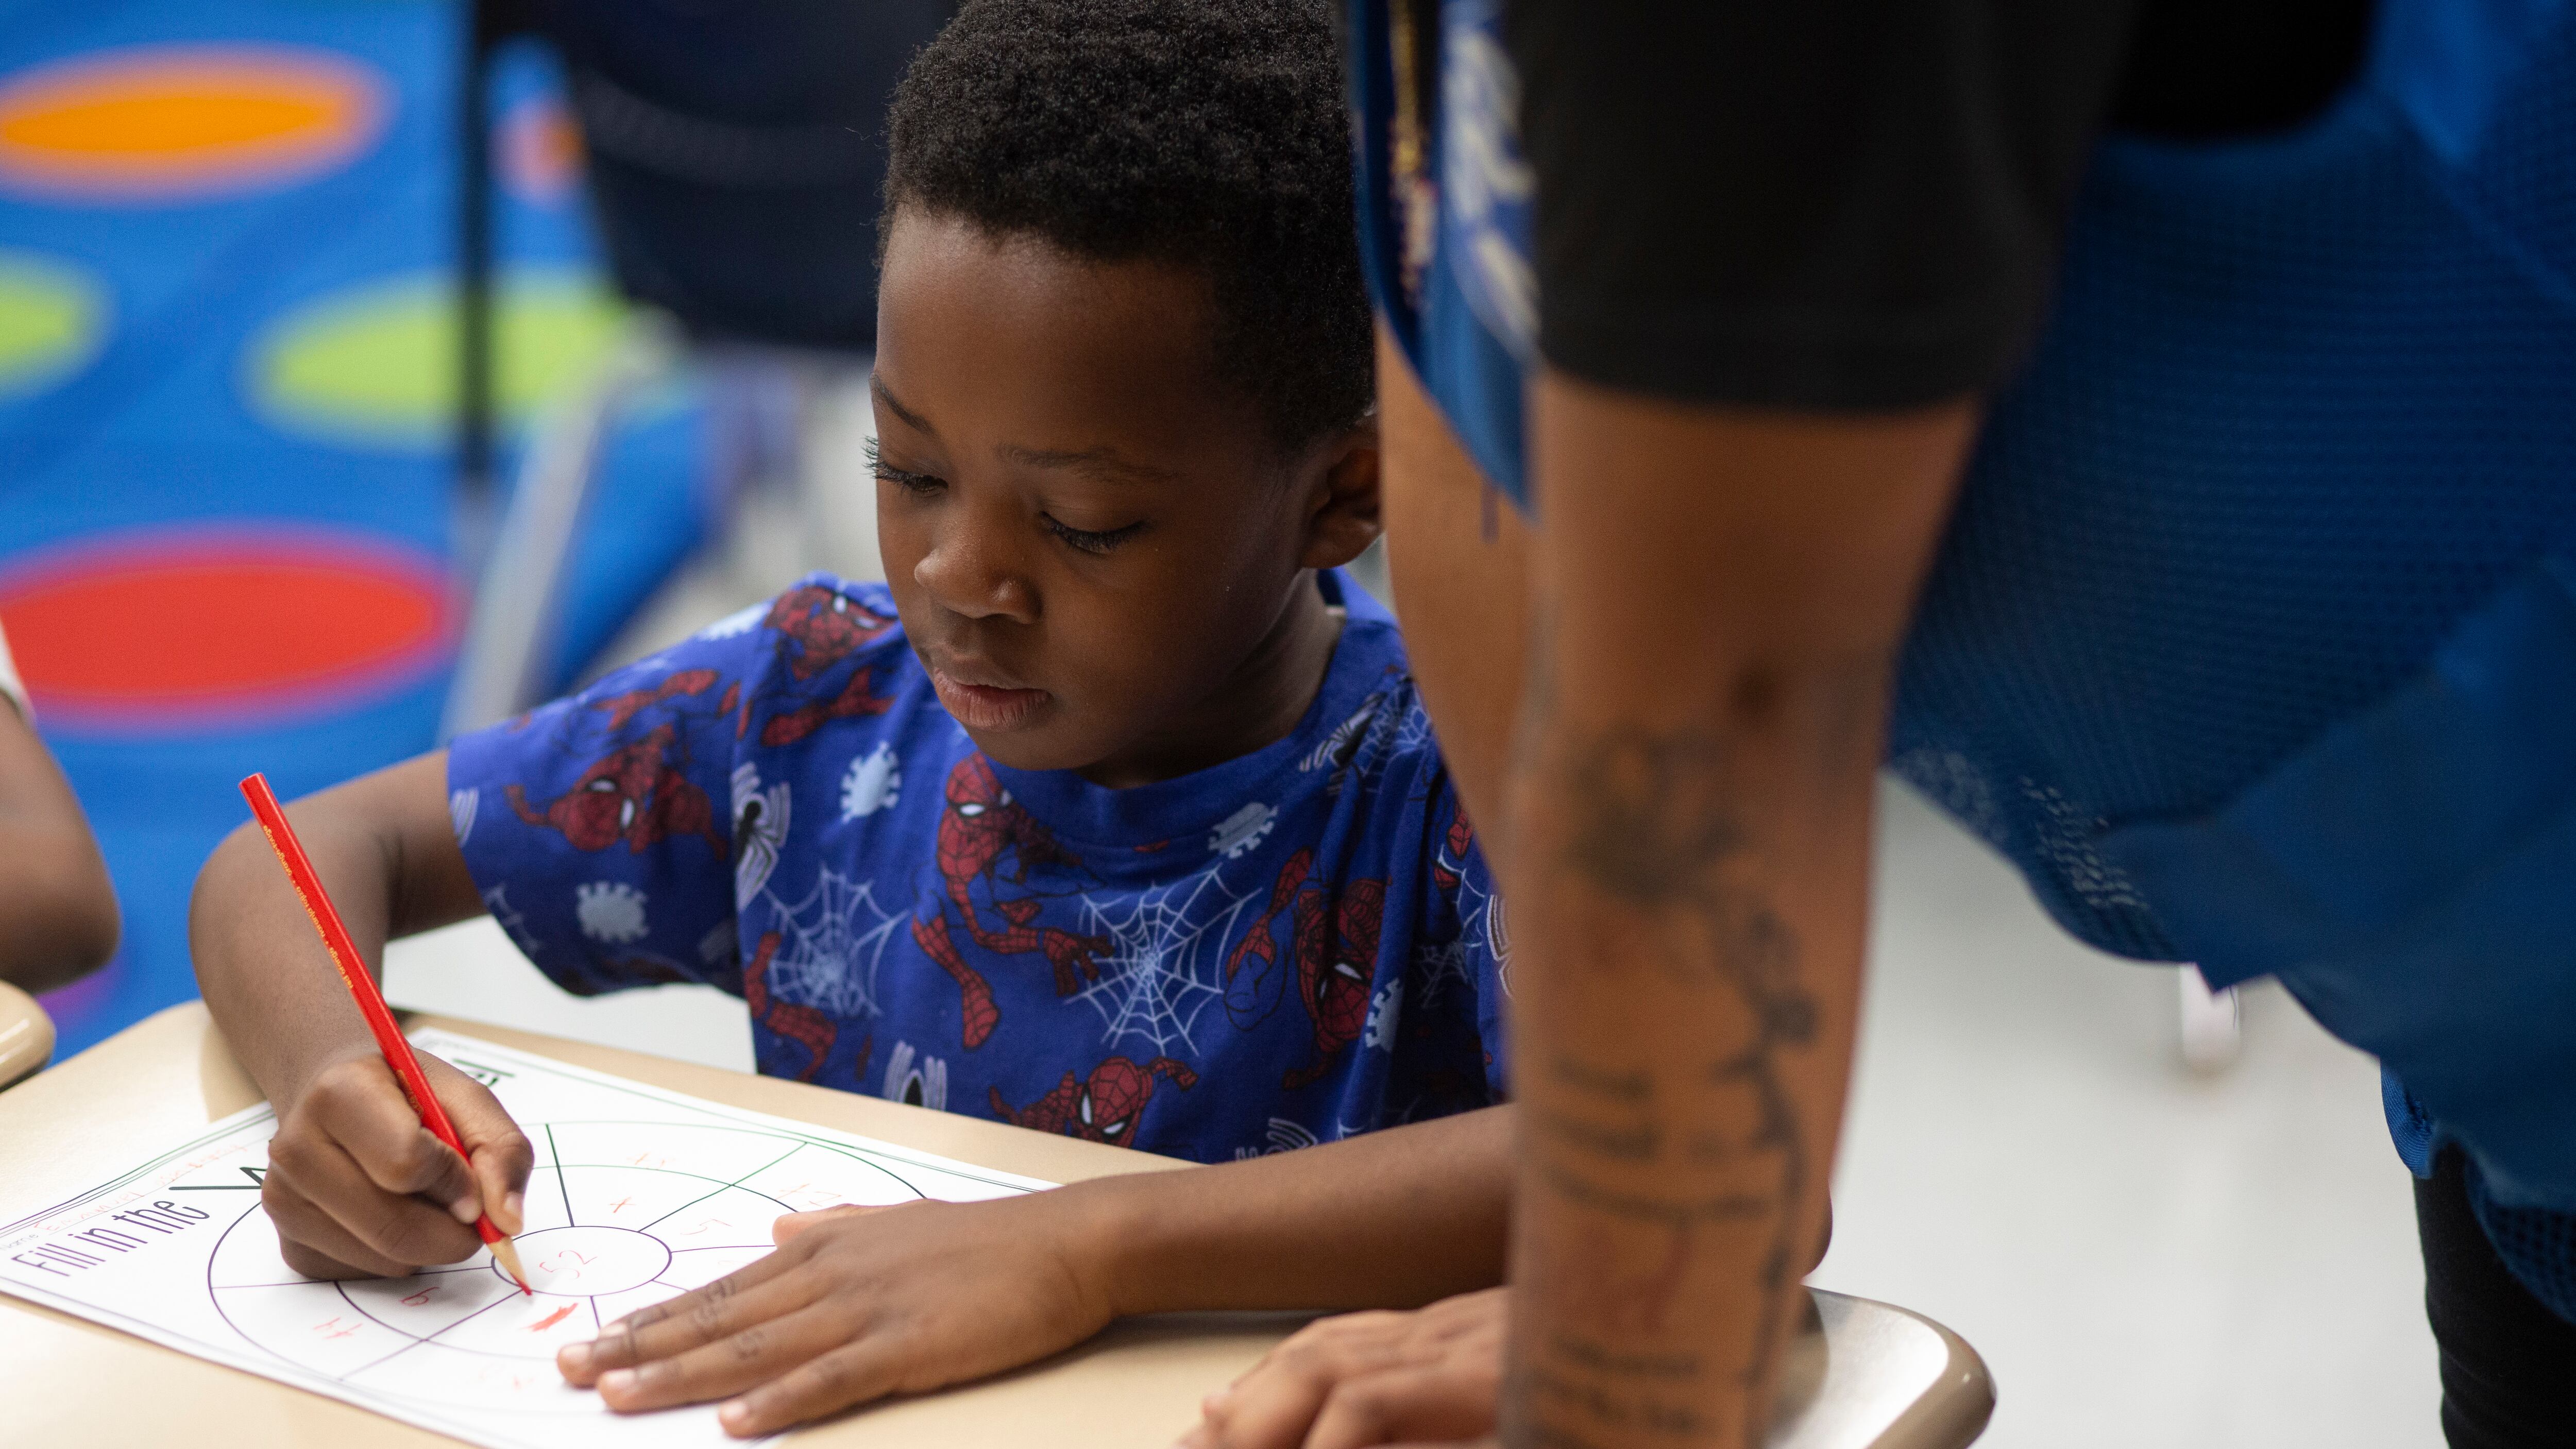 A boy wearing a blue shirt sits at a desk as a teacher’s aide helps him with his math work.